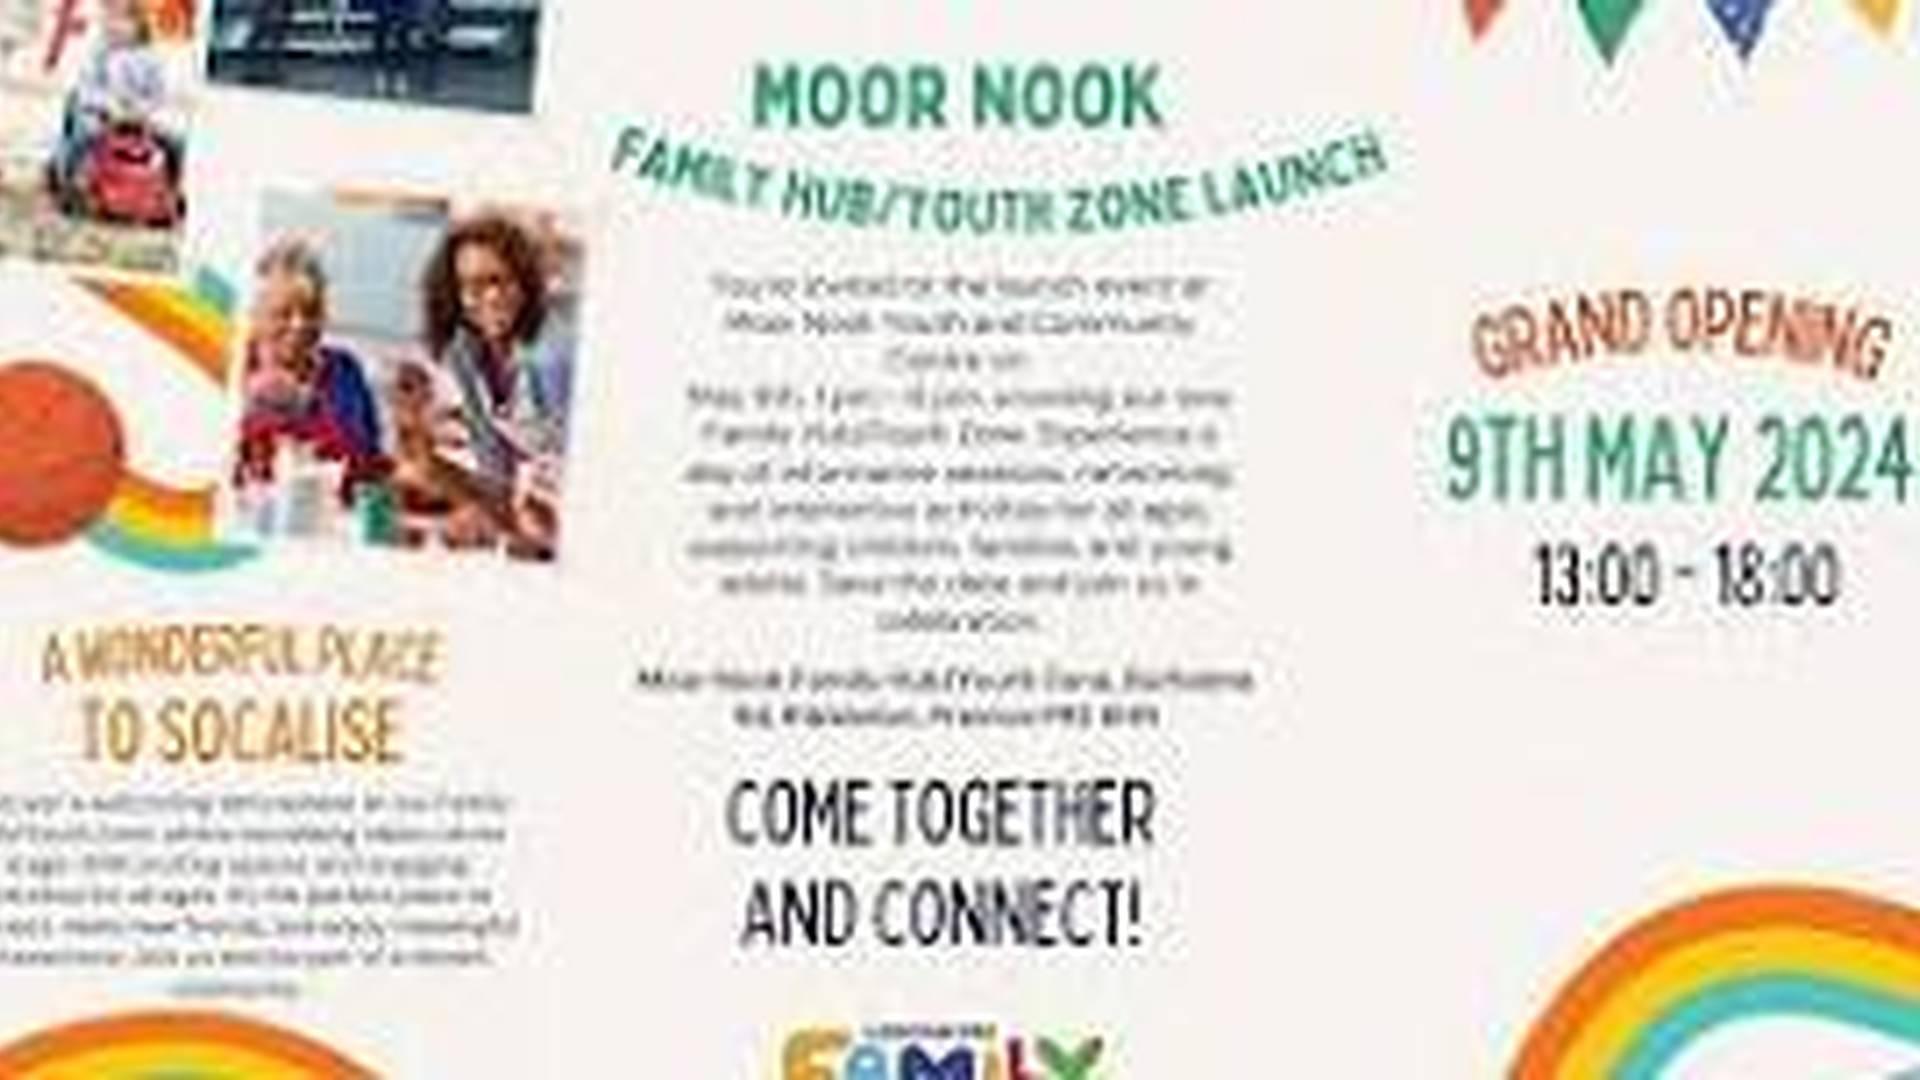 Moor Nook Family Hub / Youth Zone Launch photo